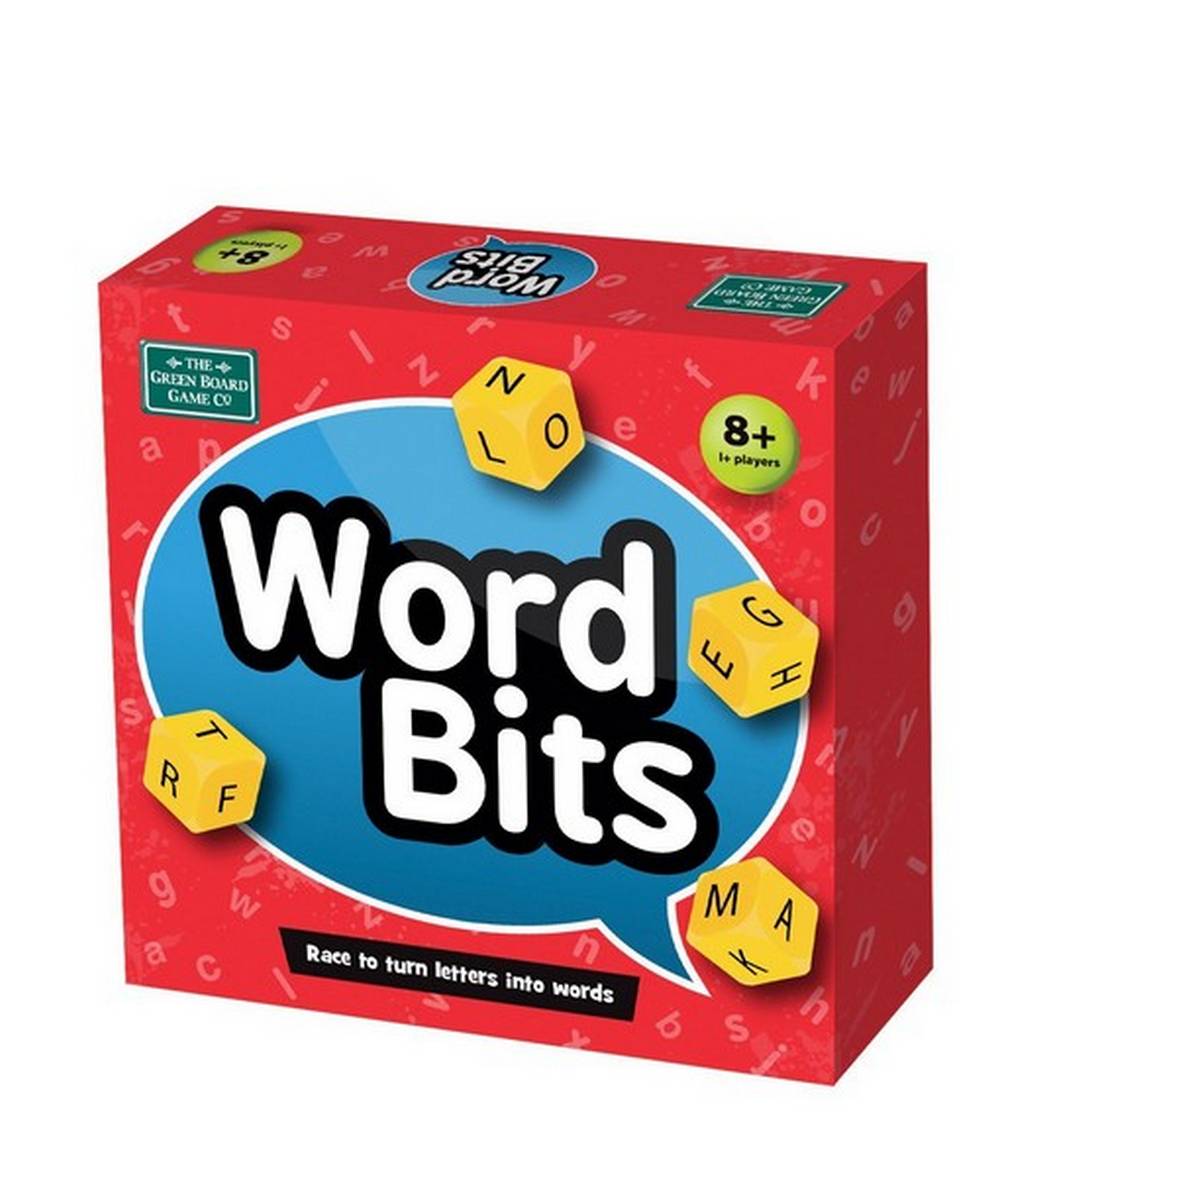 Word Bits Card Game